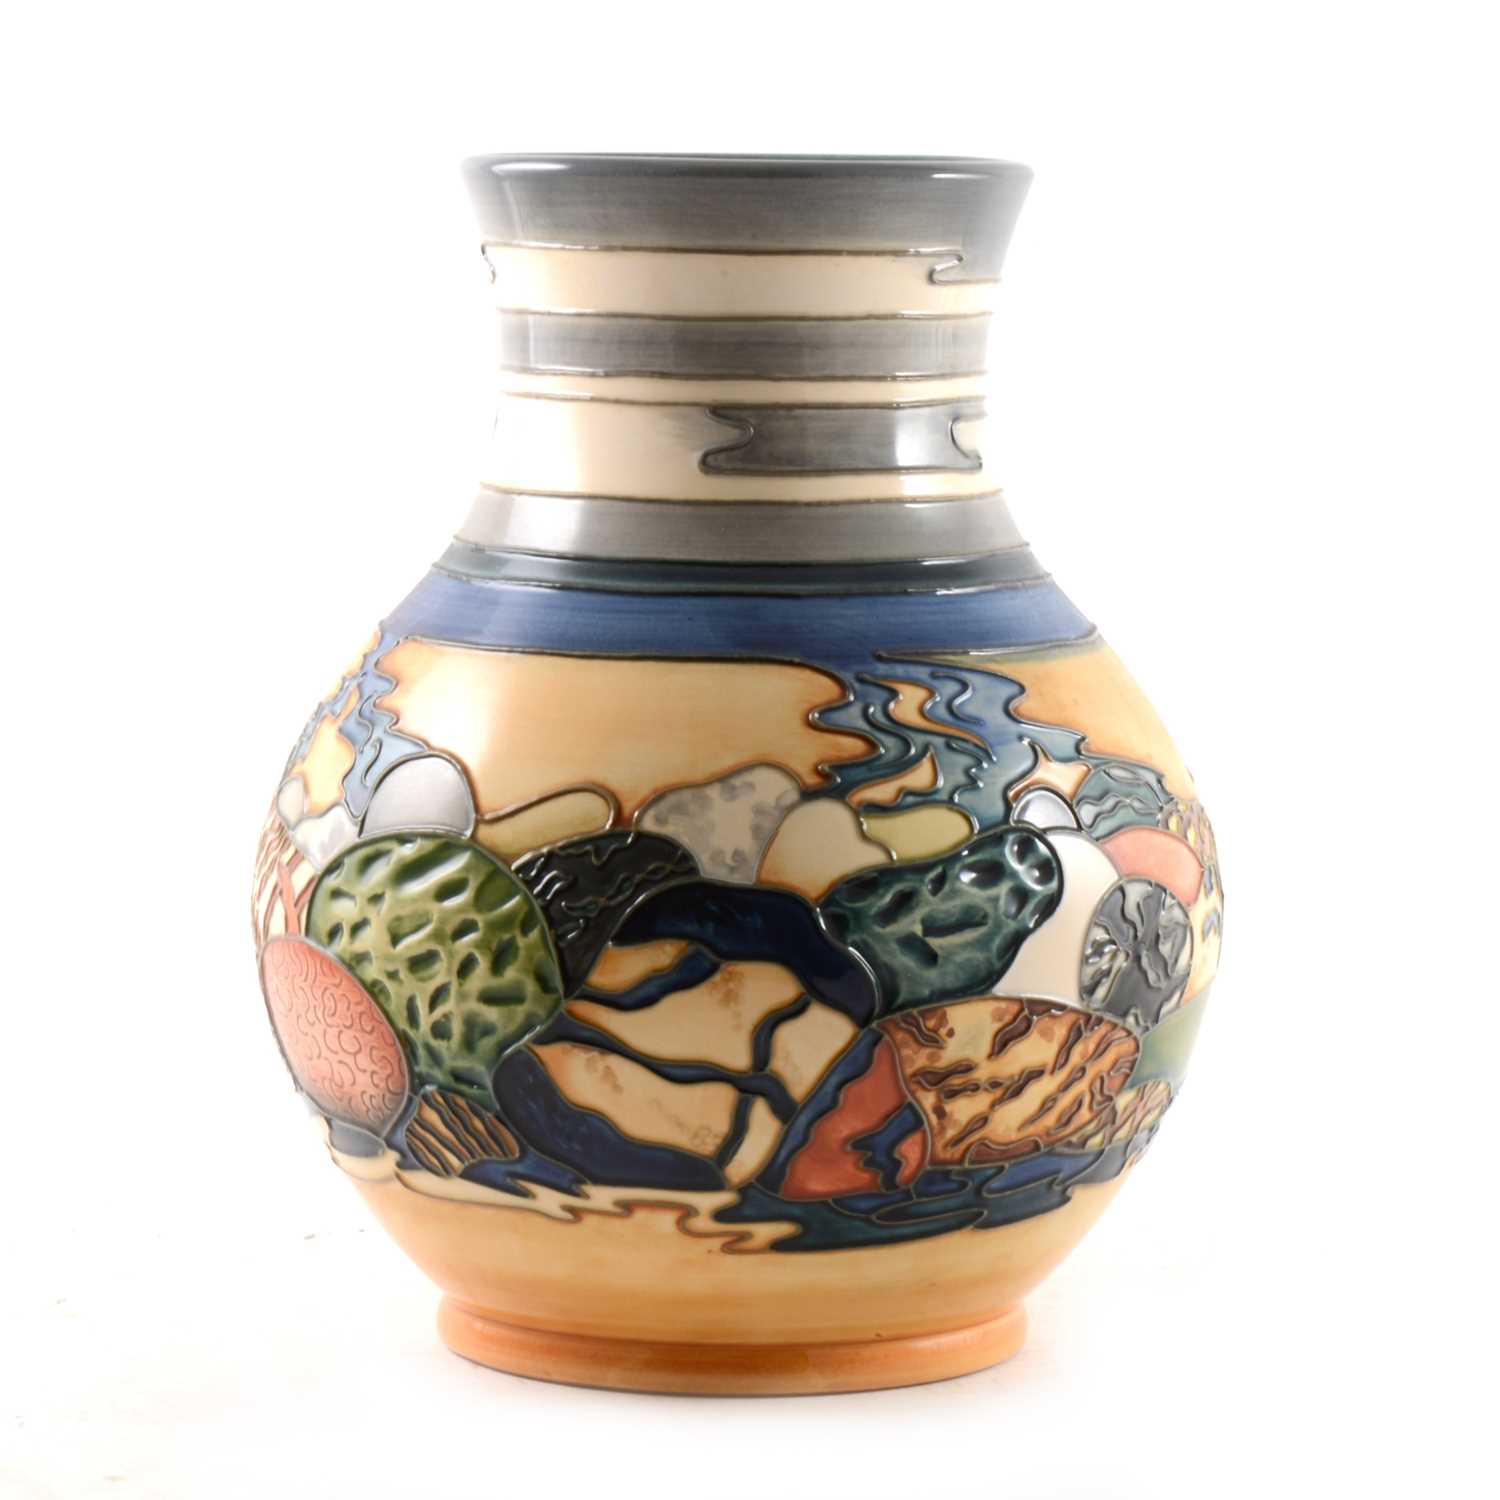 Lot 6 - A Moorcroft Pottery Collector's Club vase, 'Rocky Shore' design